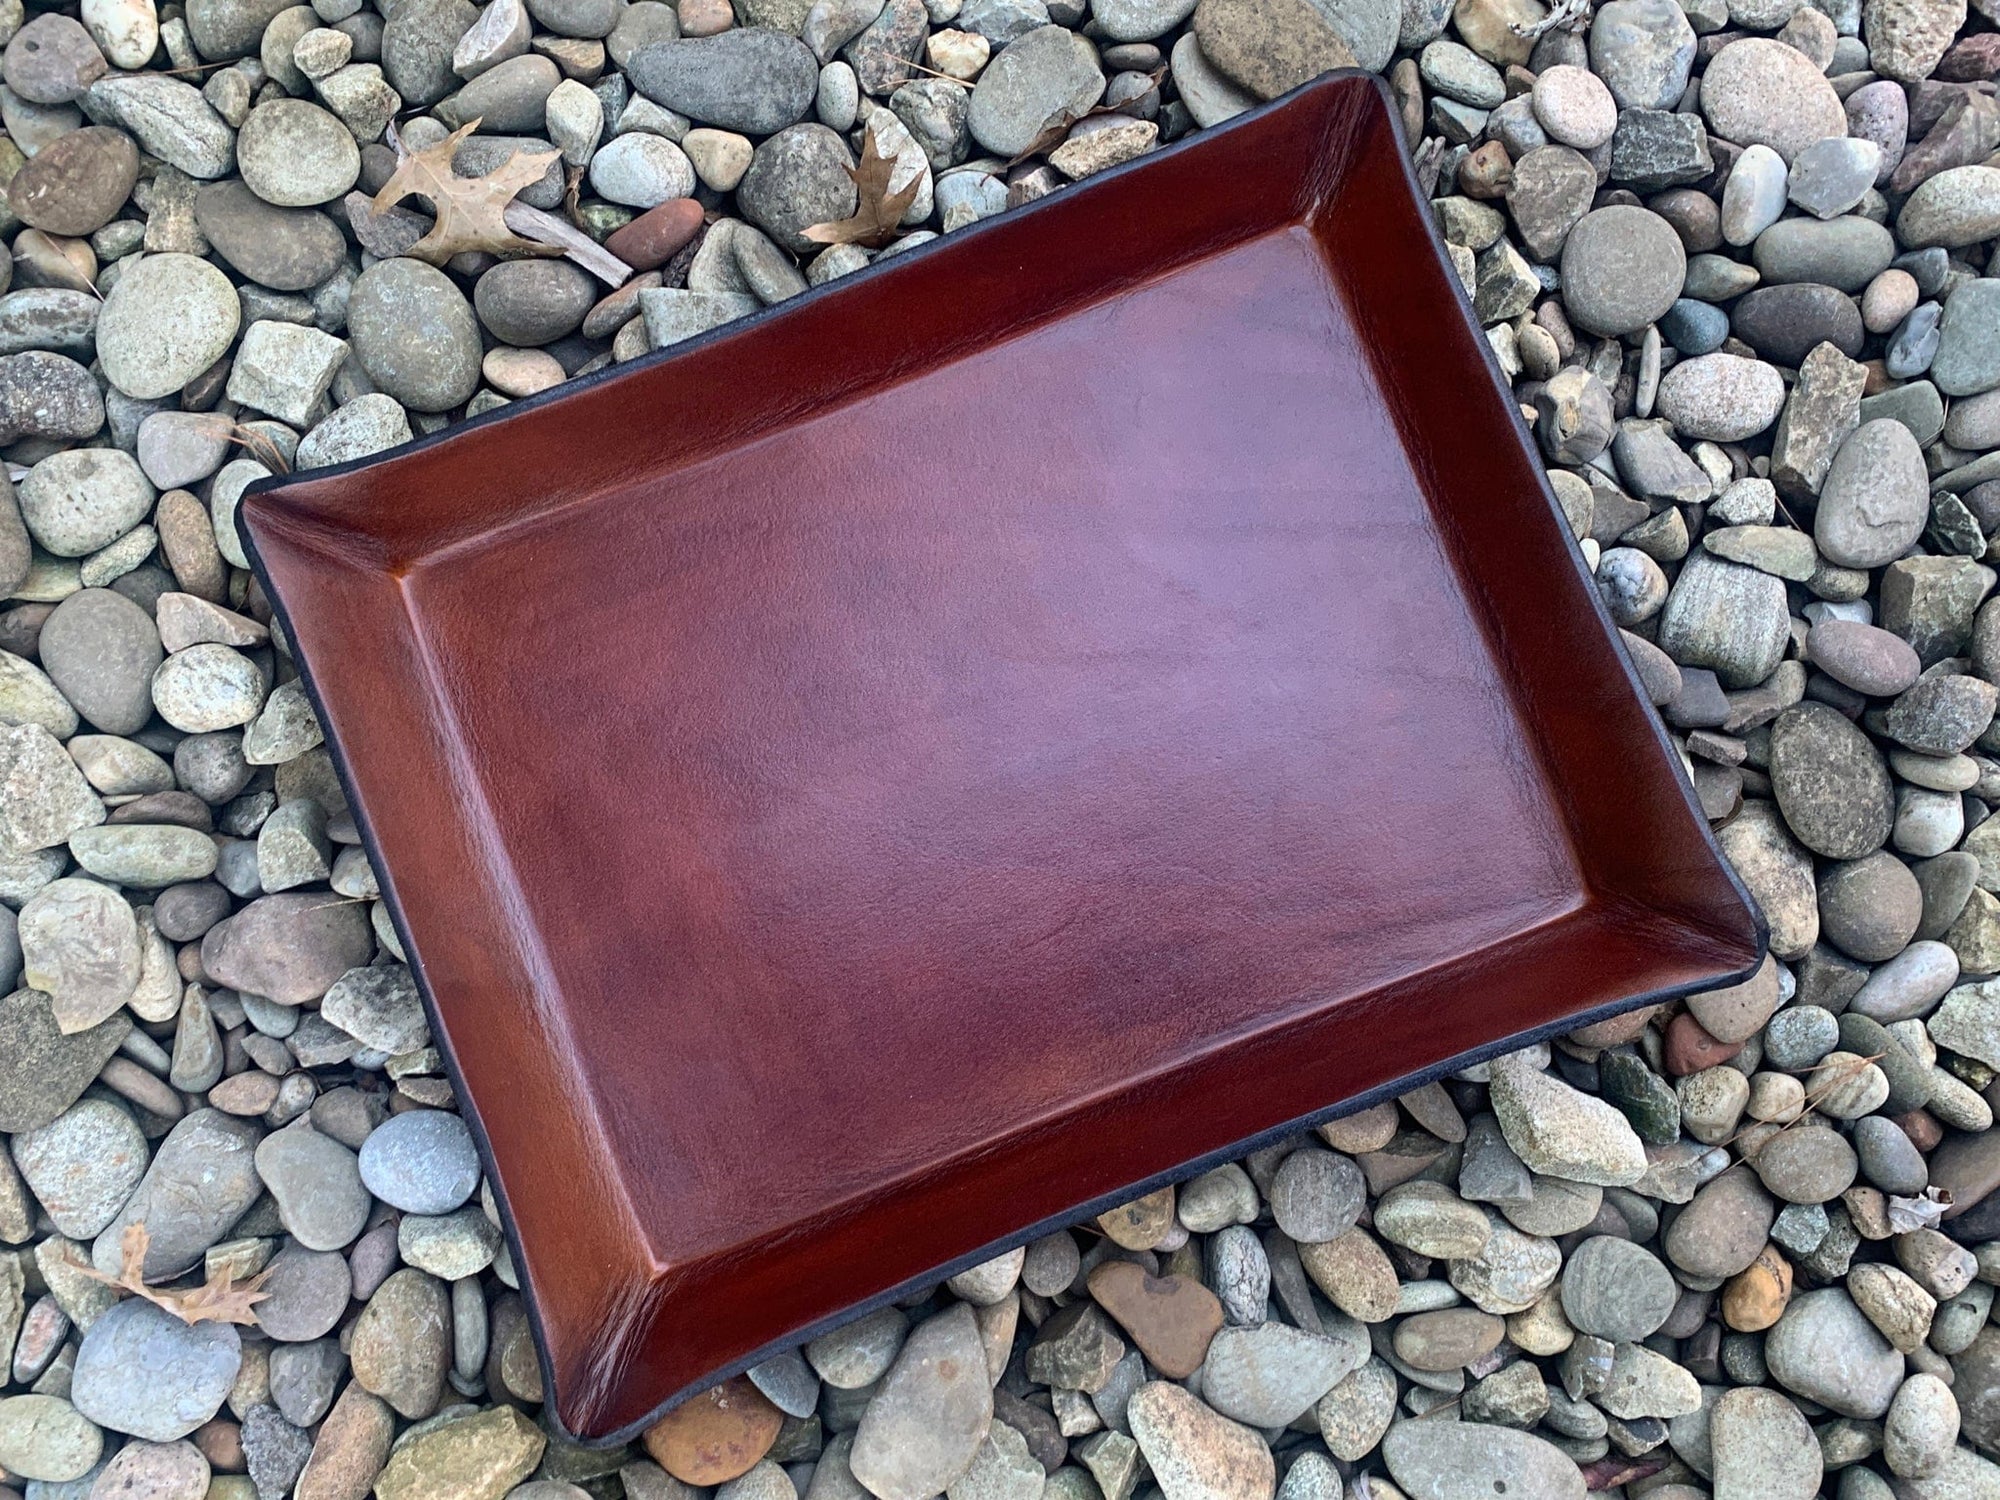 Dark brown paper-sized valet tray with black underside